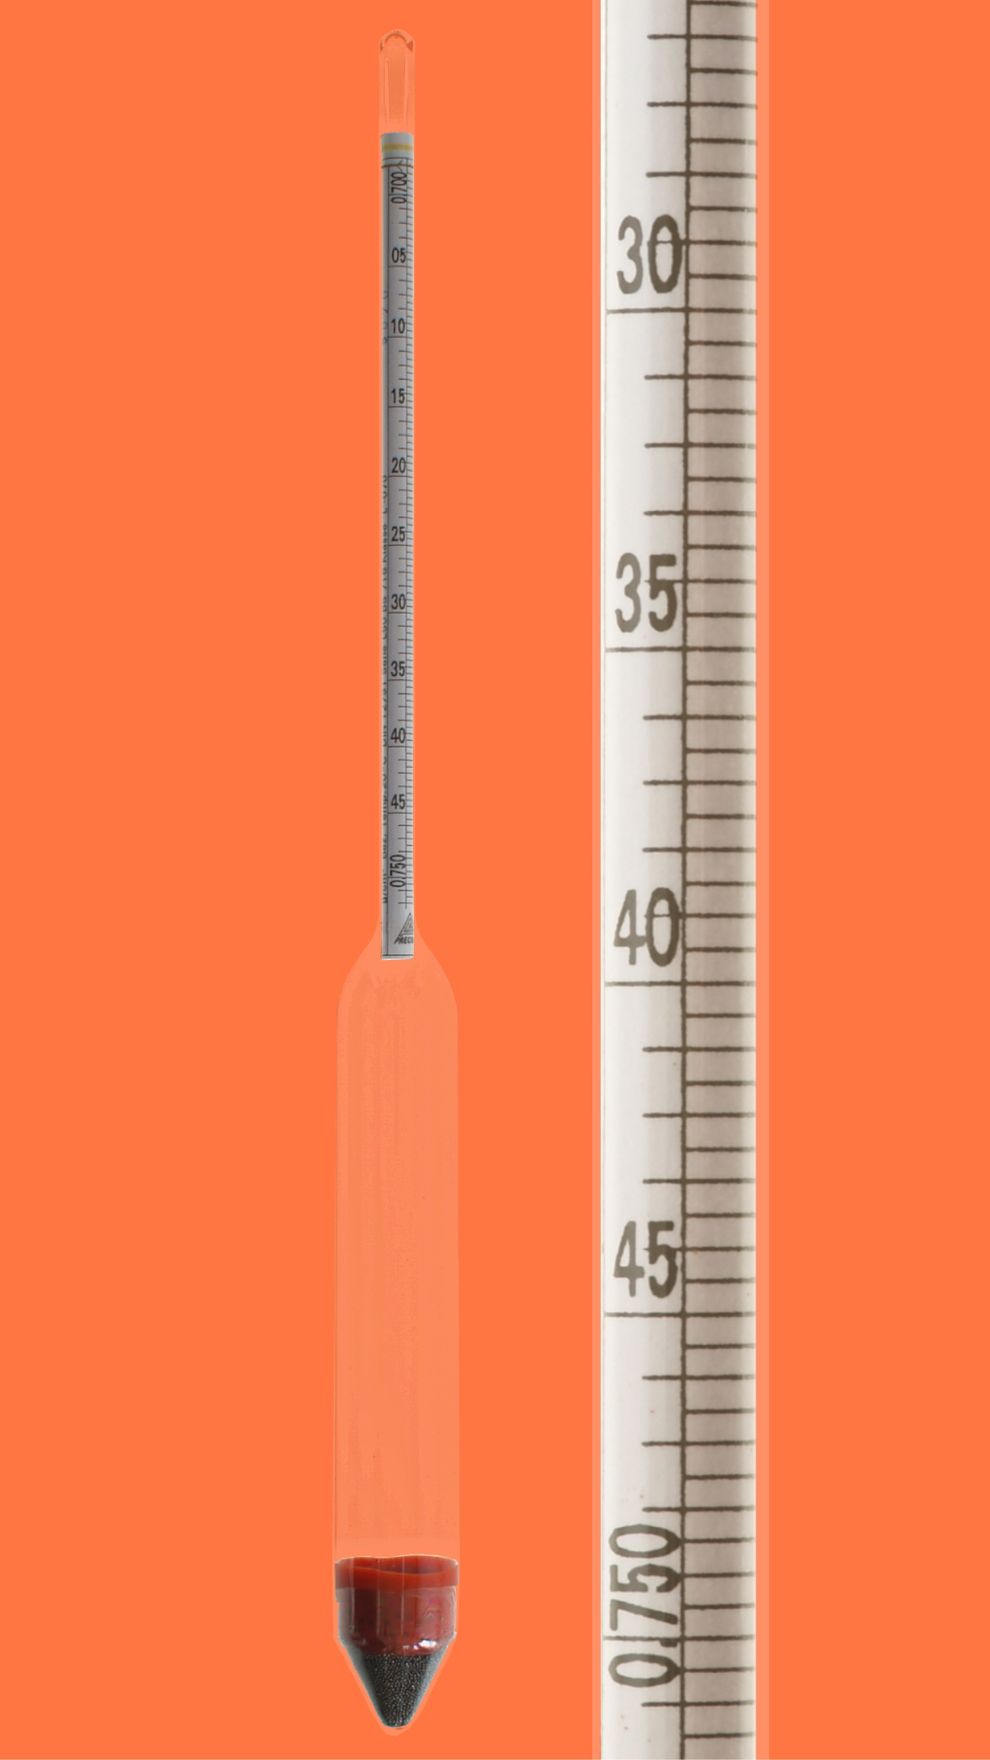 Aräometer, DIN 12791, L50, 0,90-0,95:0,0005g/cm³, Bezugstemp. 20°C, ohne Thermometer